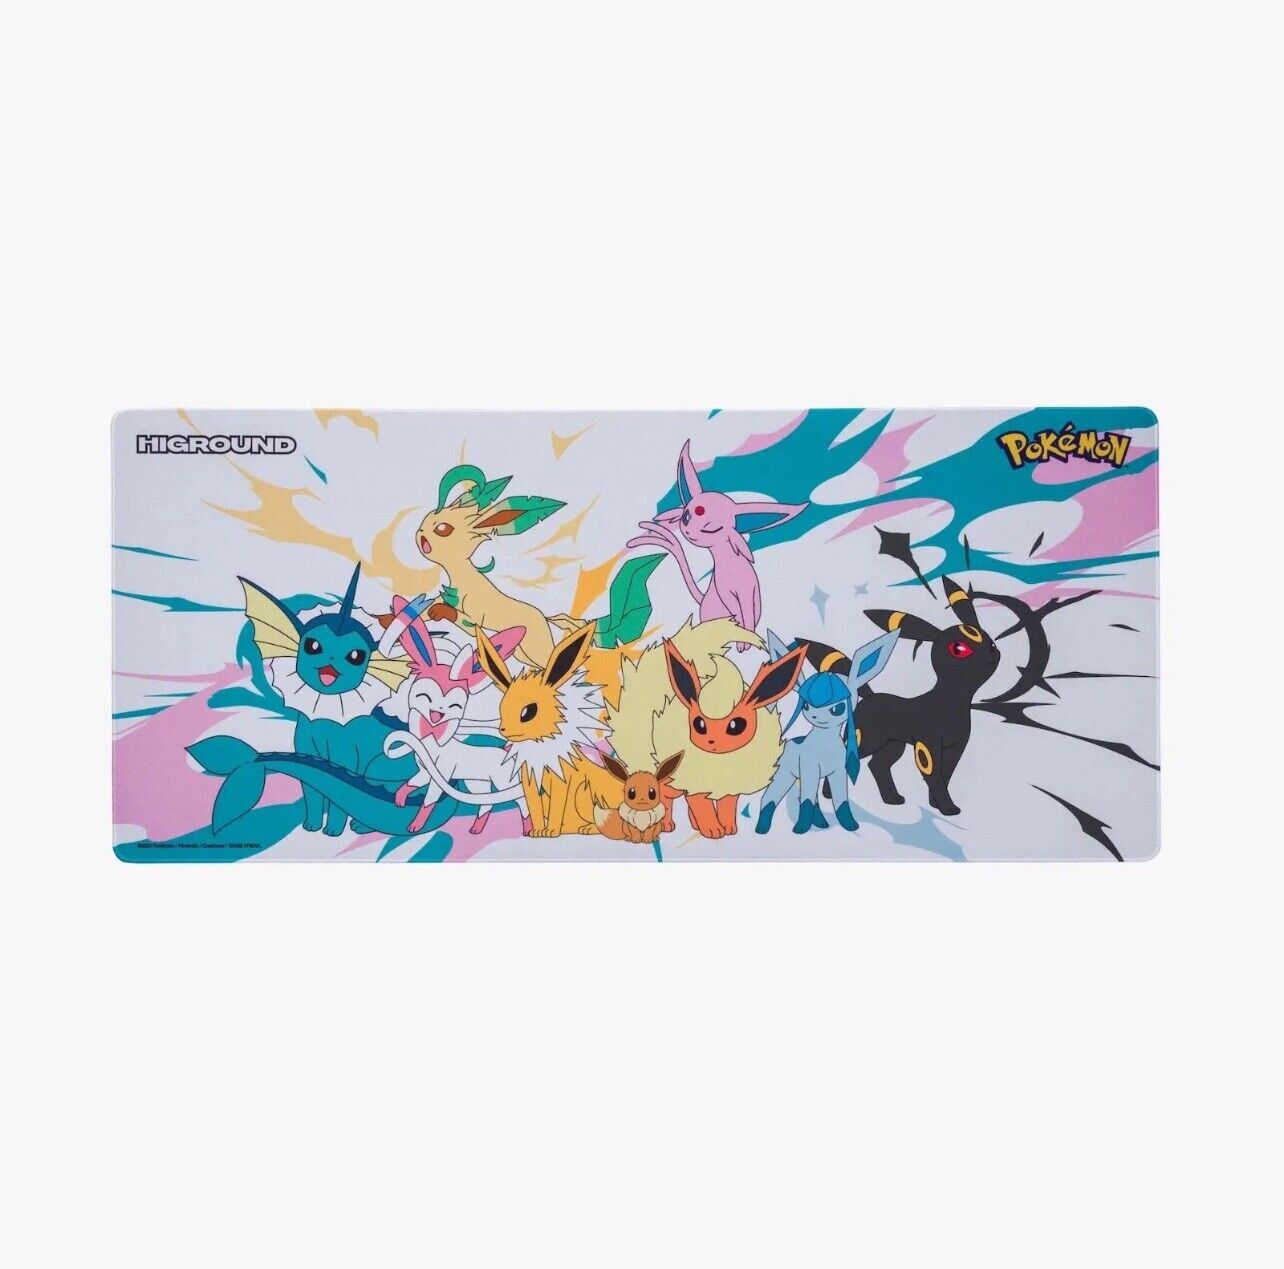 Pokémon x Higround Mousepad XL Eevee Eeveelutions